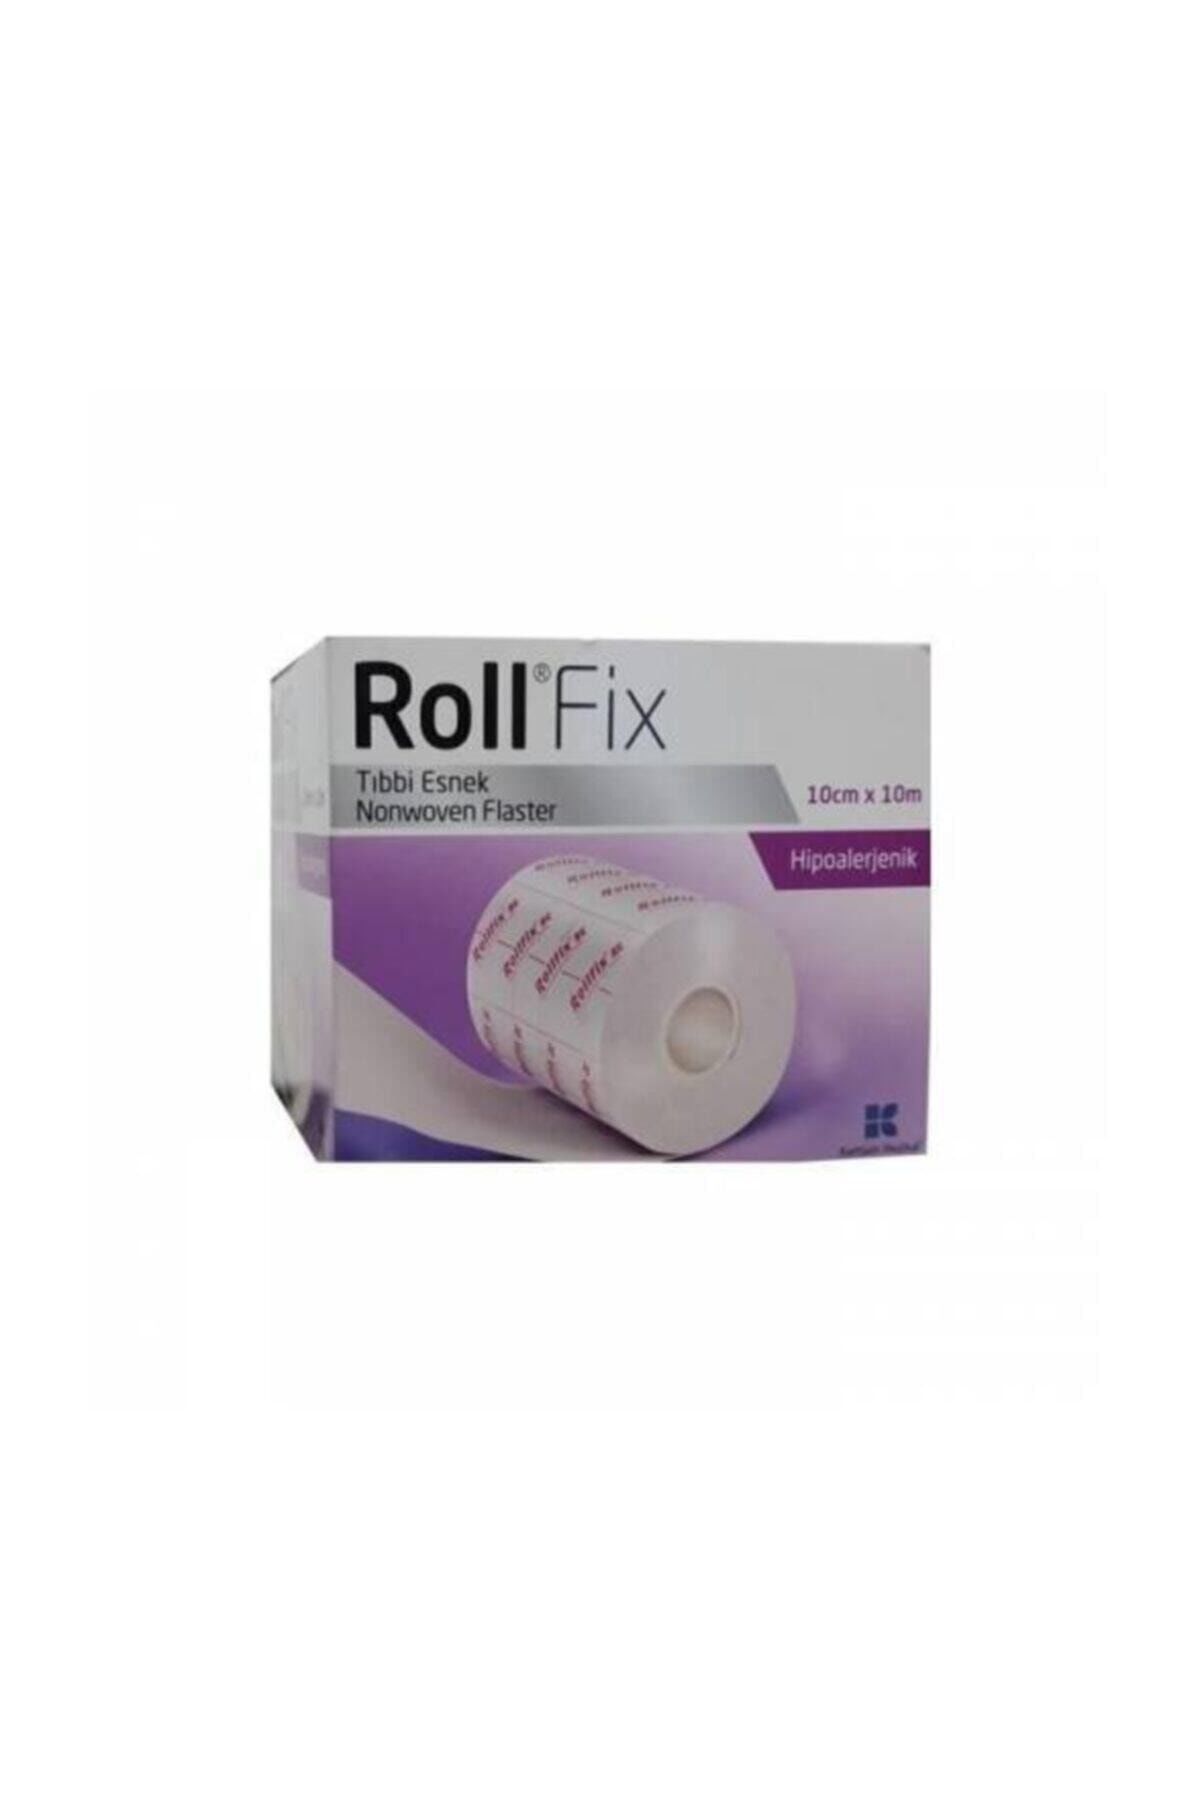 Roll Fix Tıbbi Esnek Nonwoven Flaster 10 Cm x 10 M